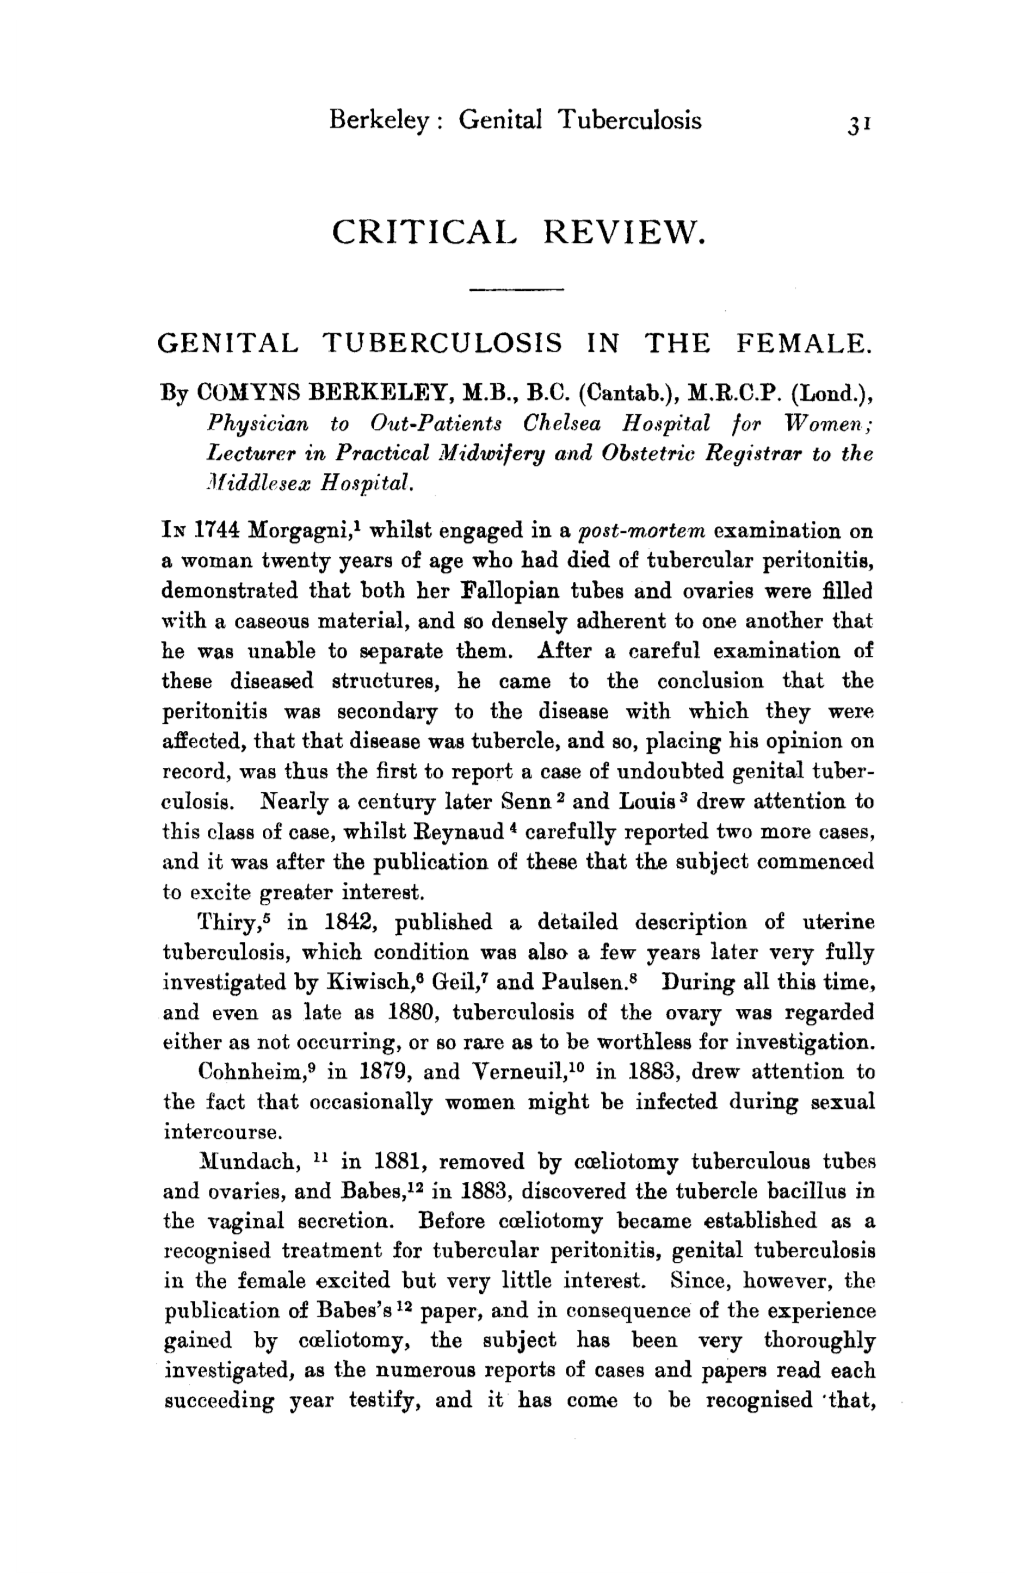 GENITAL TUBERCULOSIS in the FEMALE. by COMYNS BERKELEY, M.B.,B.C